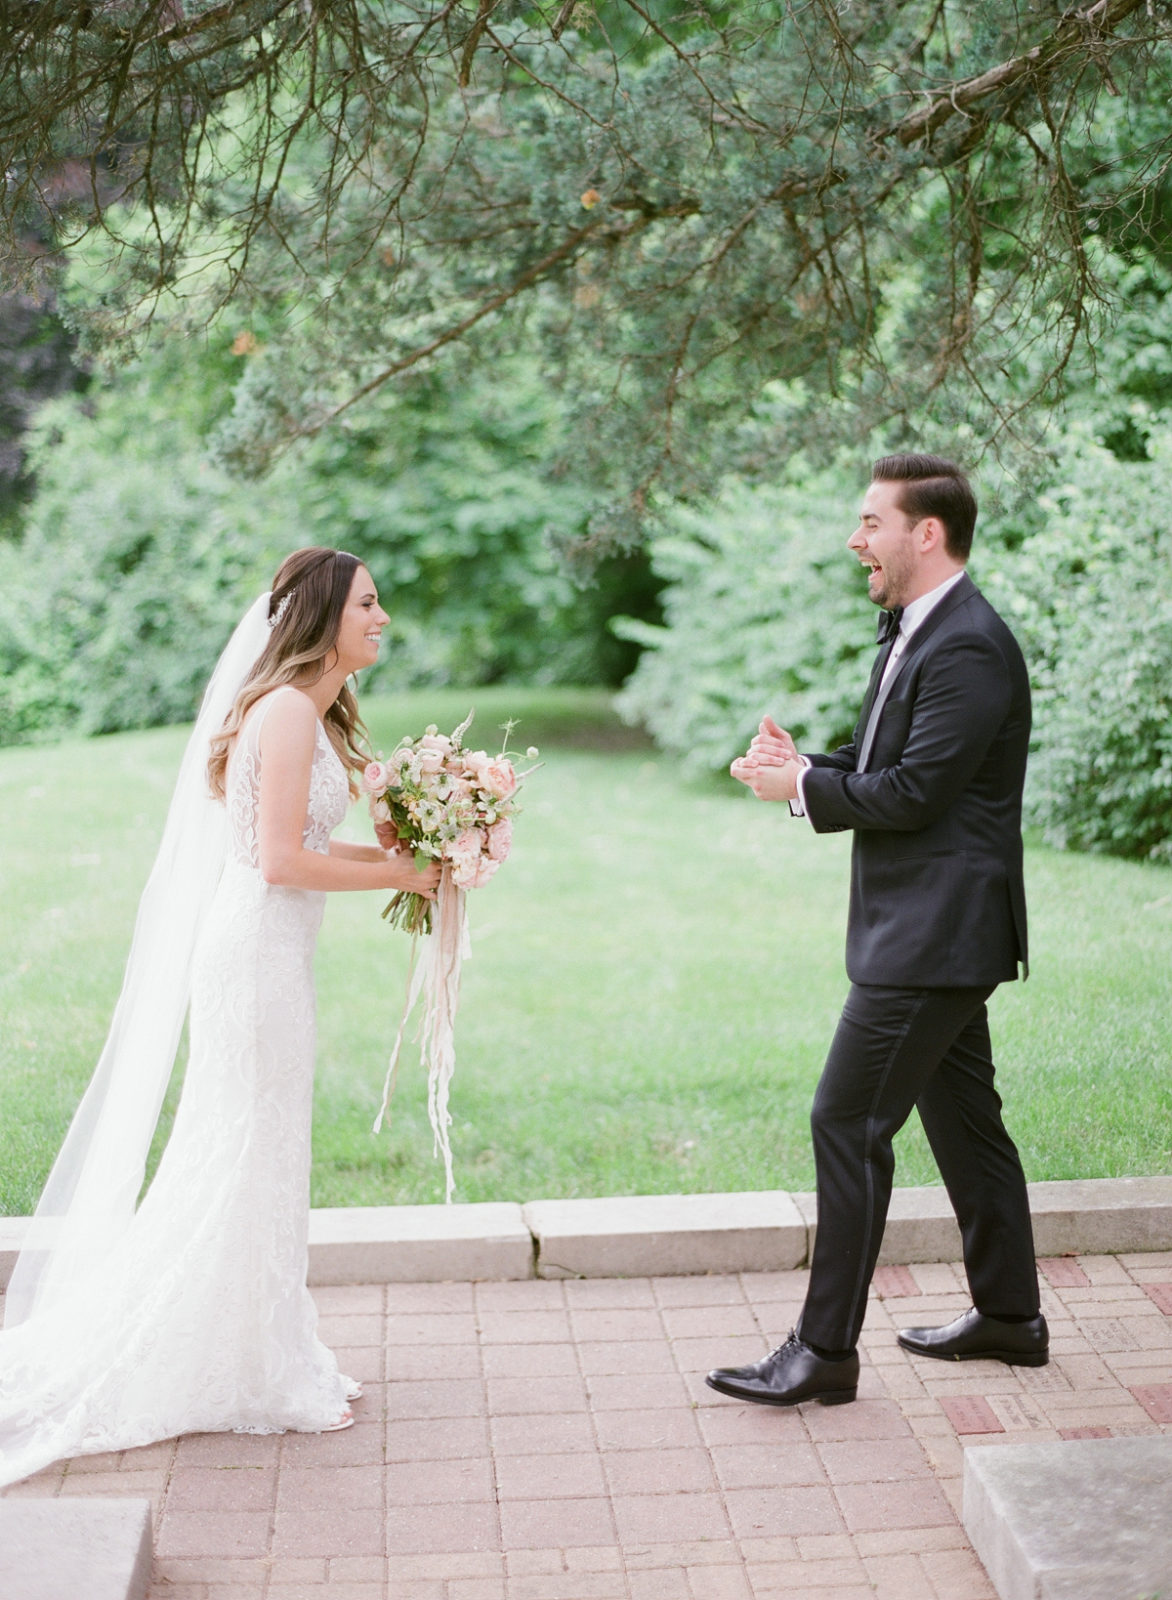 Laurel Hall Wedding Photos | Molly Carr Photography | Fine Art Film Photographer | Chicago Wedding | Summer Garden Party Wedding | European Wedding Inspiration | Bride and Groom First Look